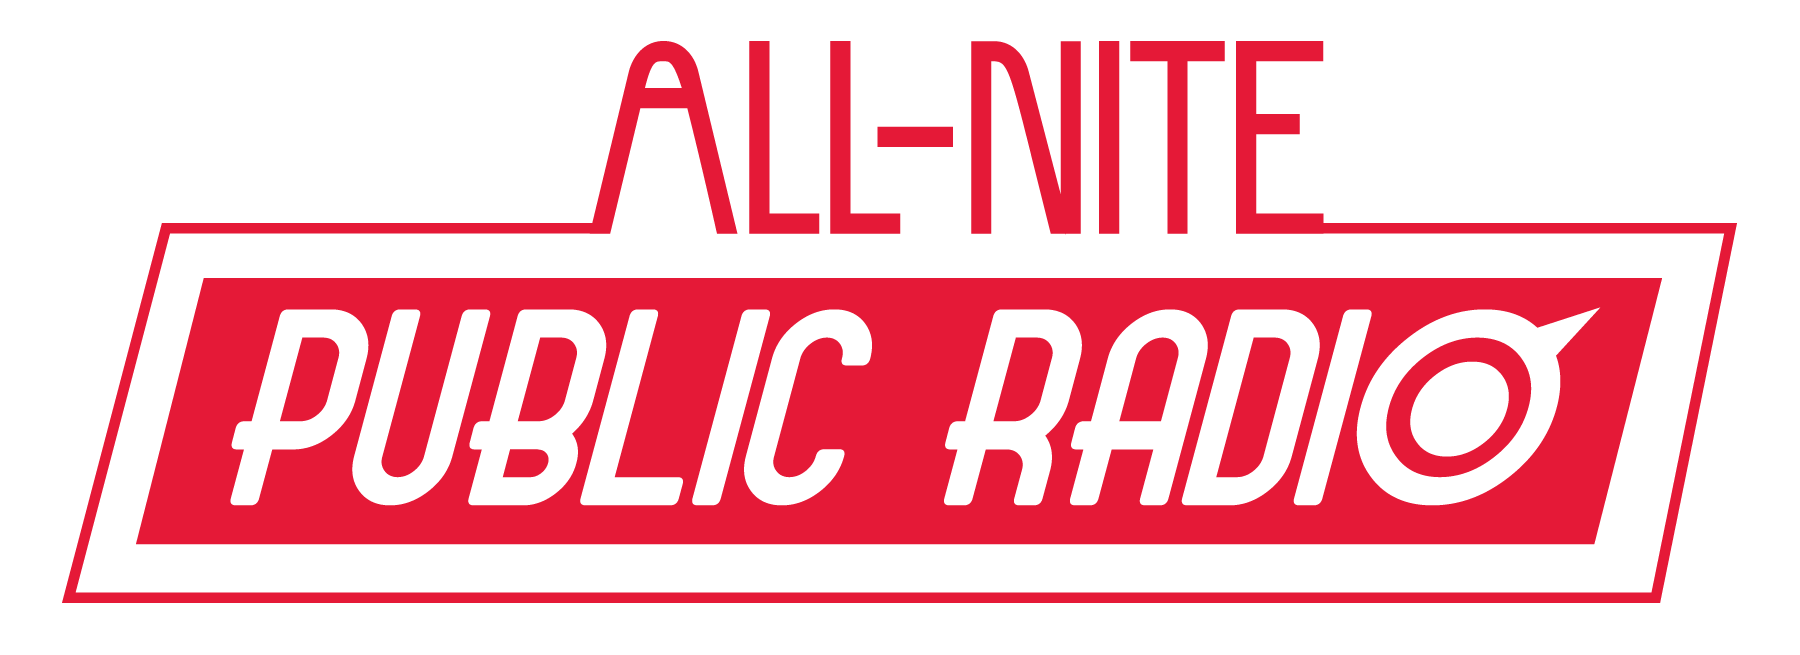 All-Nite Public Radio